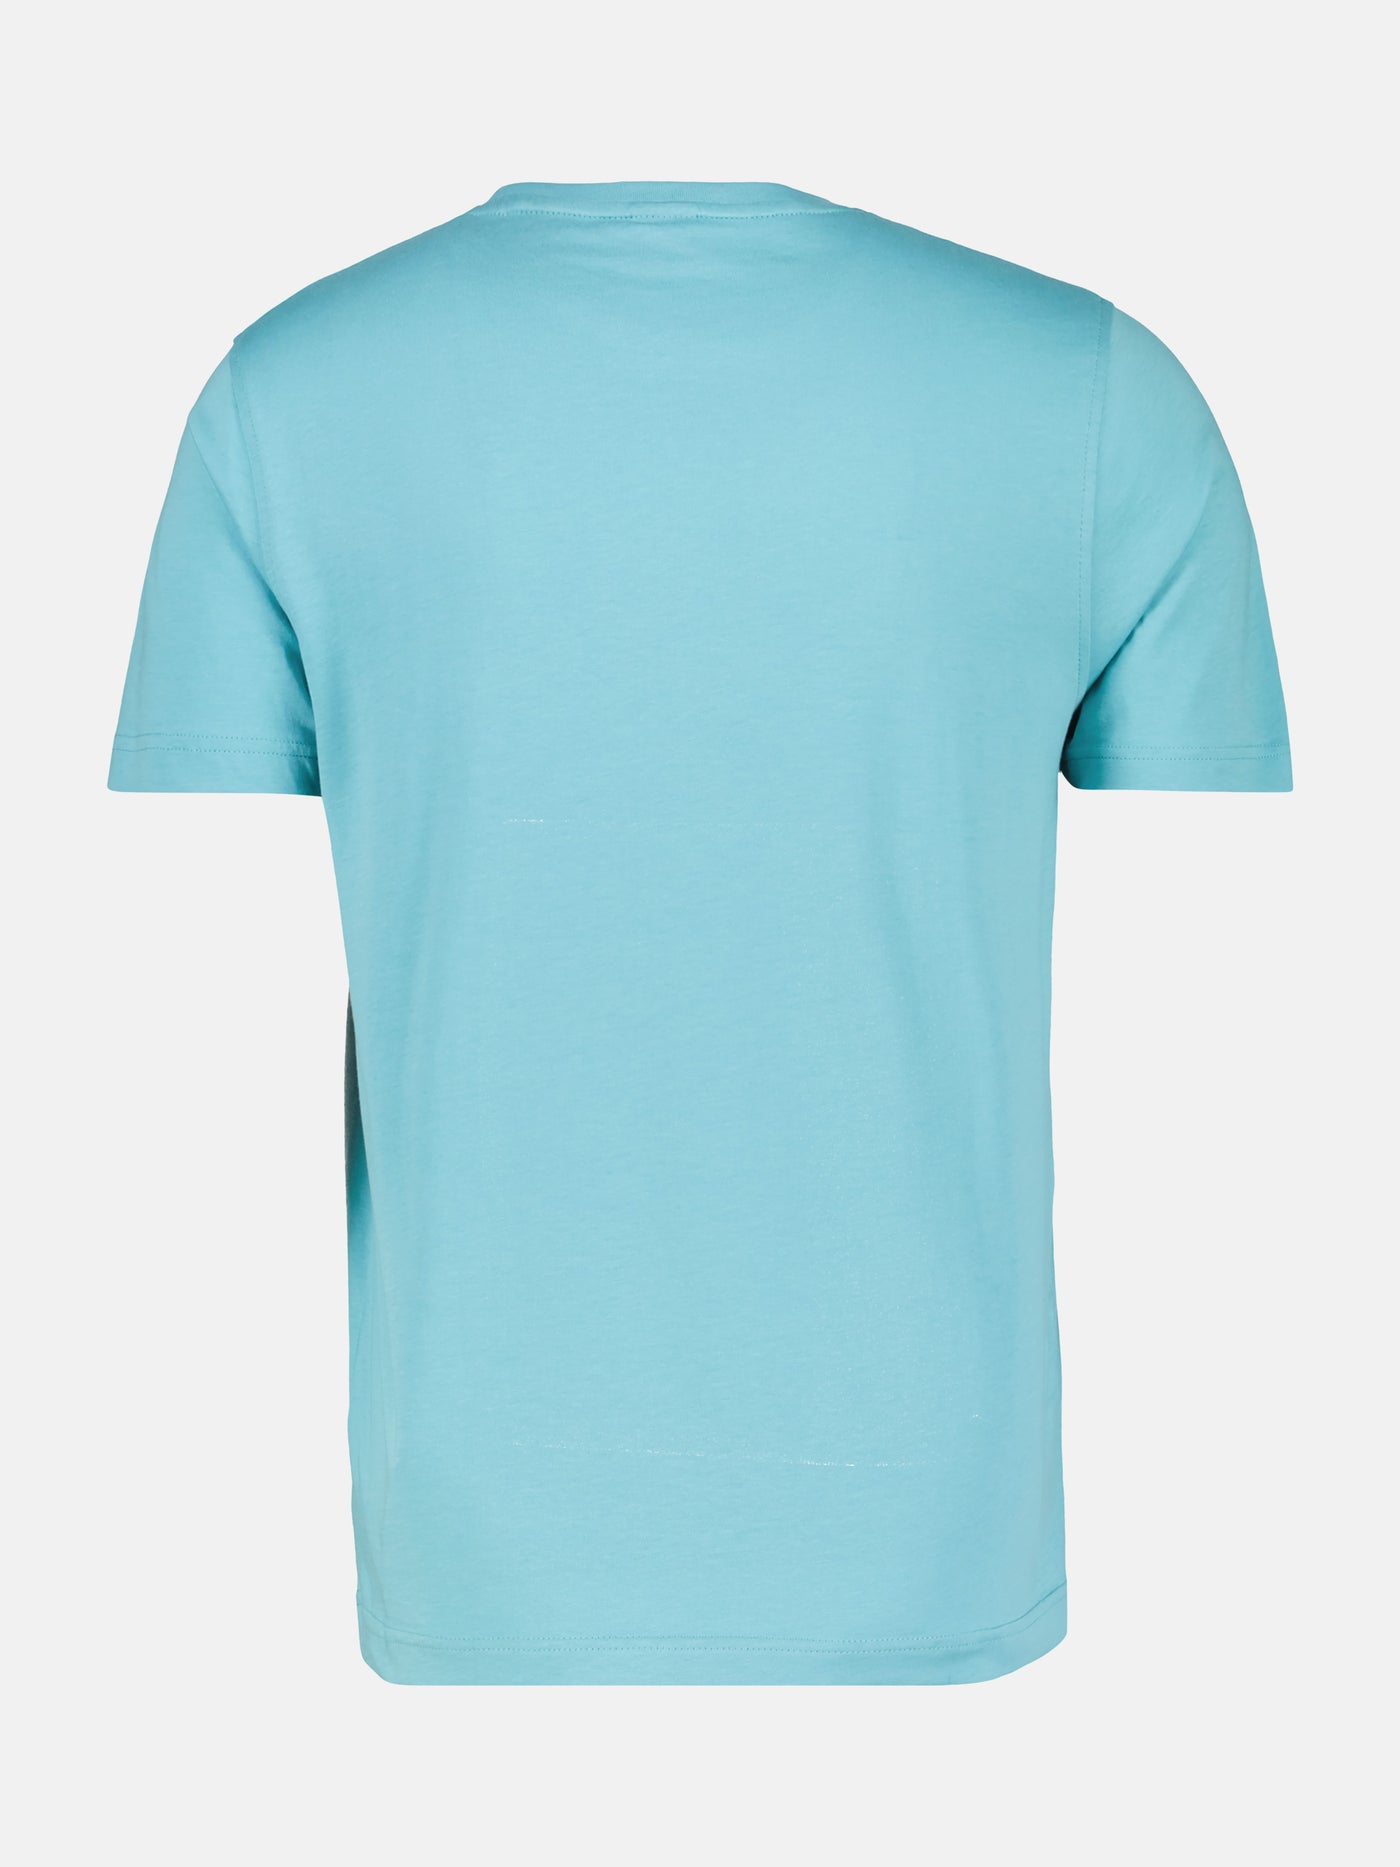 Basic T-Shirt in vielen Farben